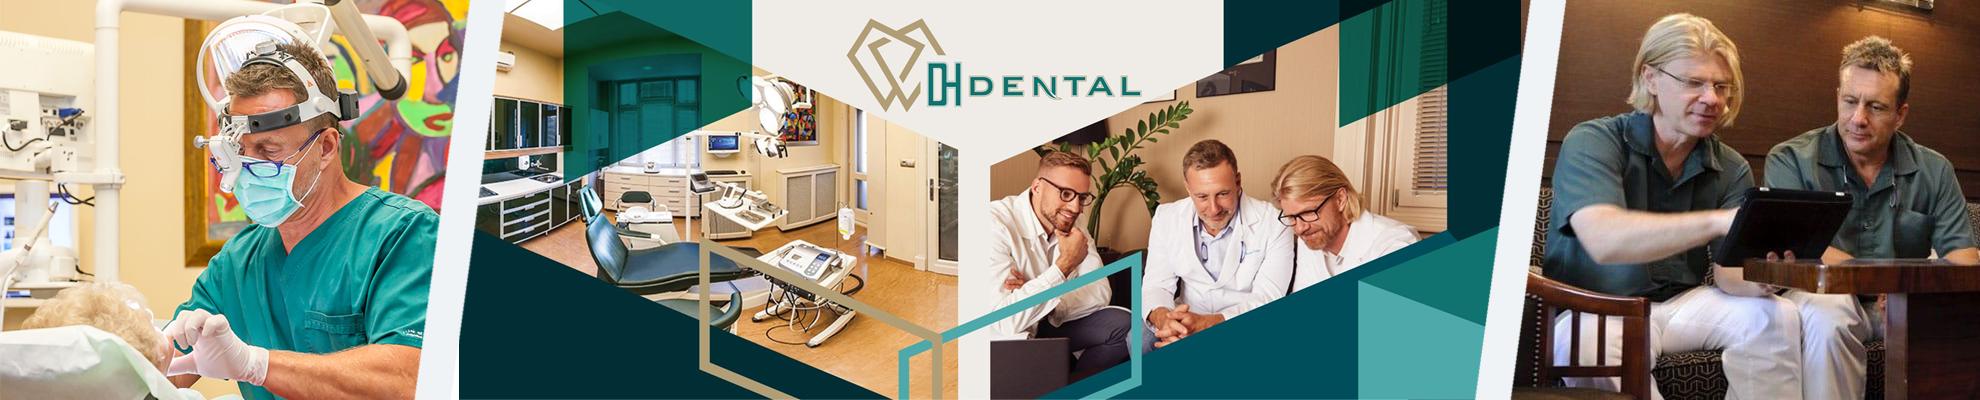 DH Dental - Dr Decker & Dr Huszar banner